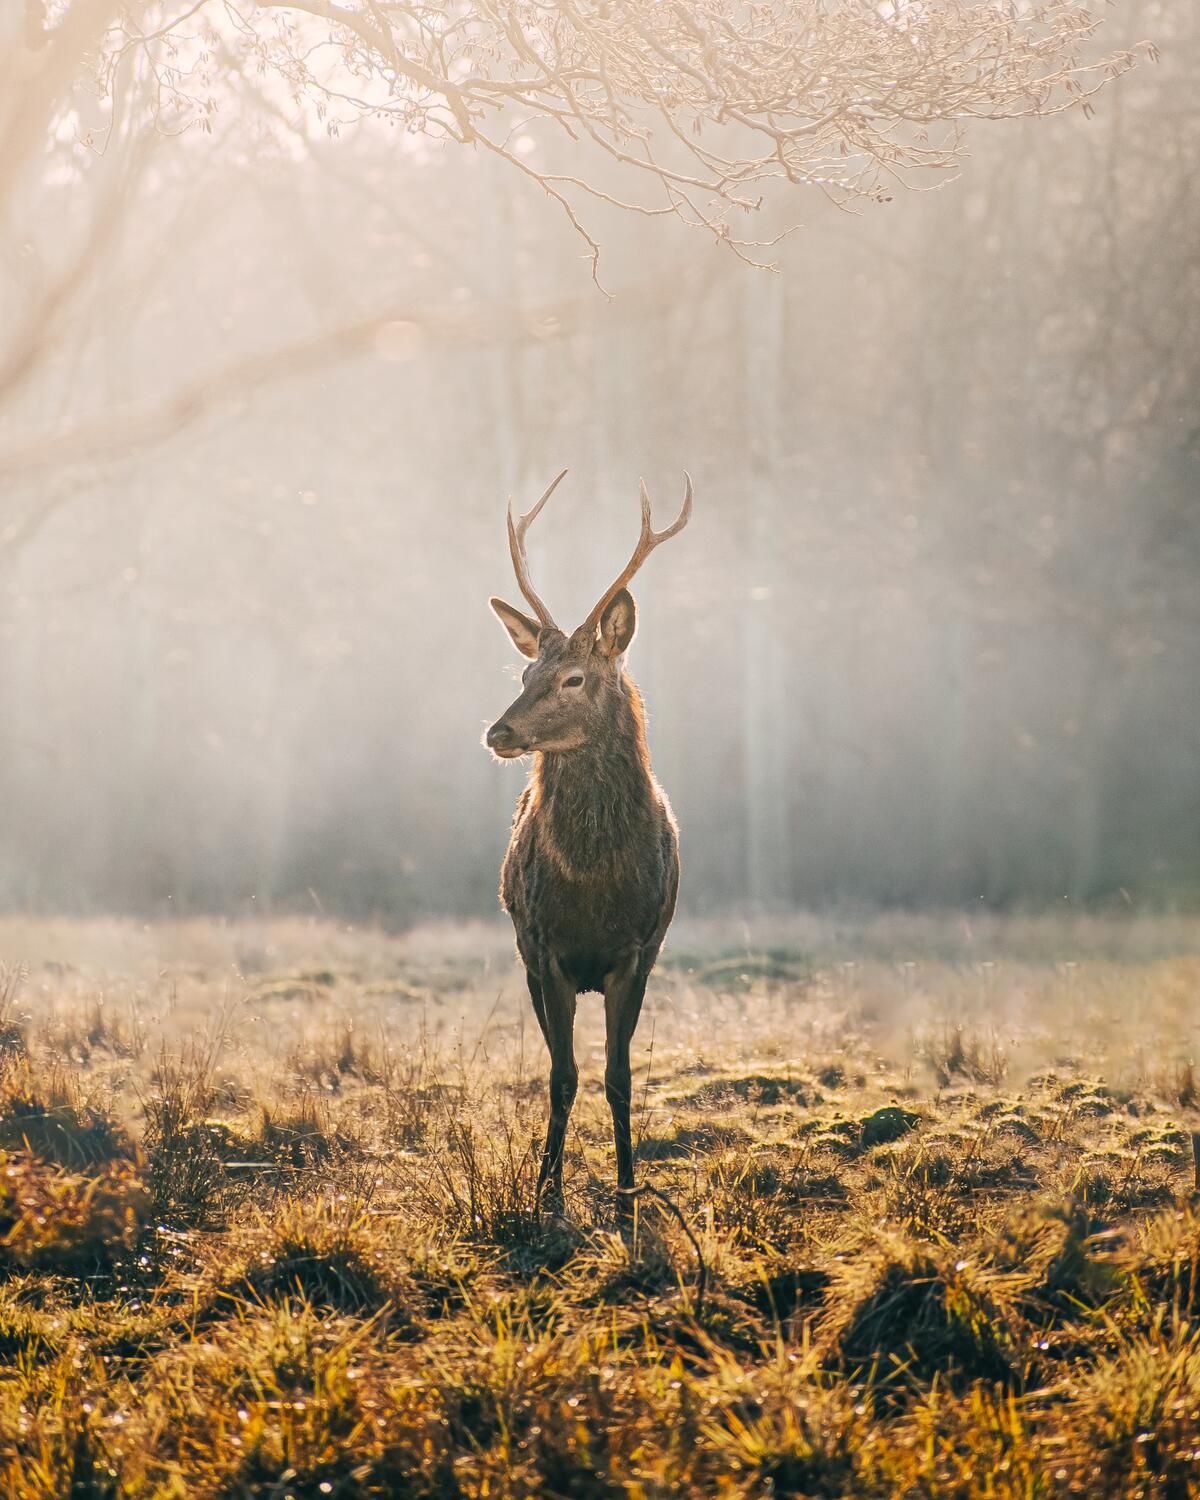 A deer walks on the morning misty lawn